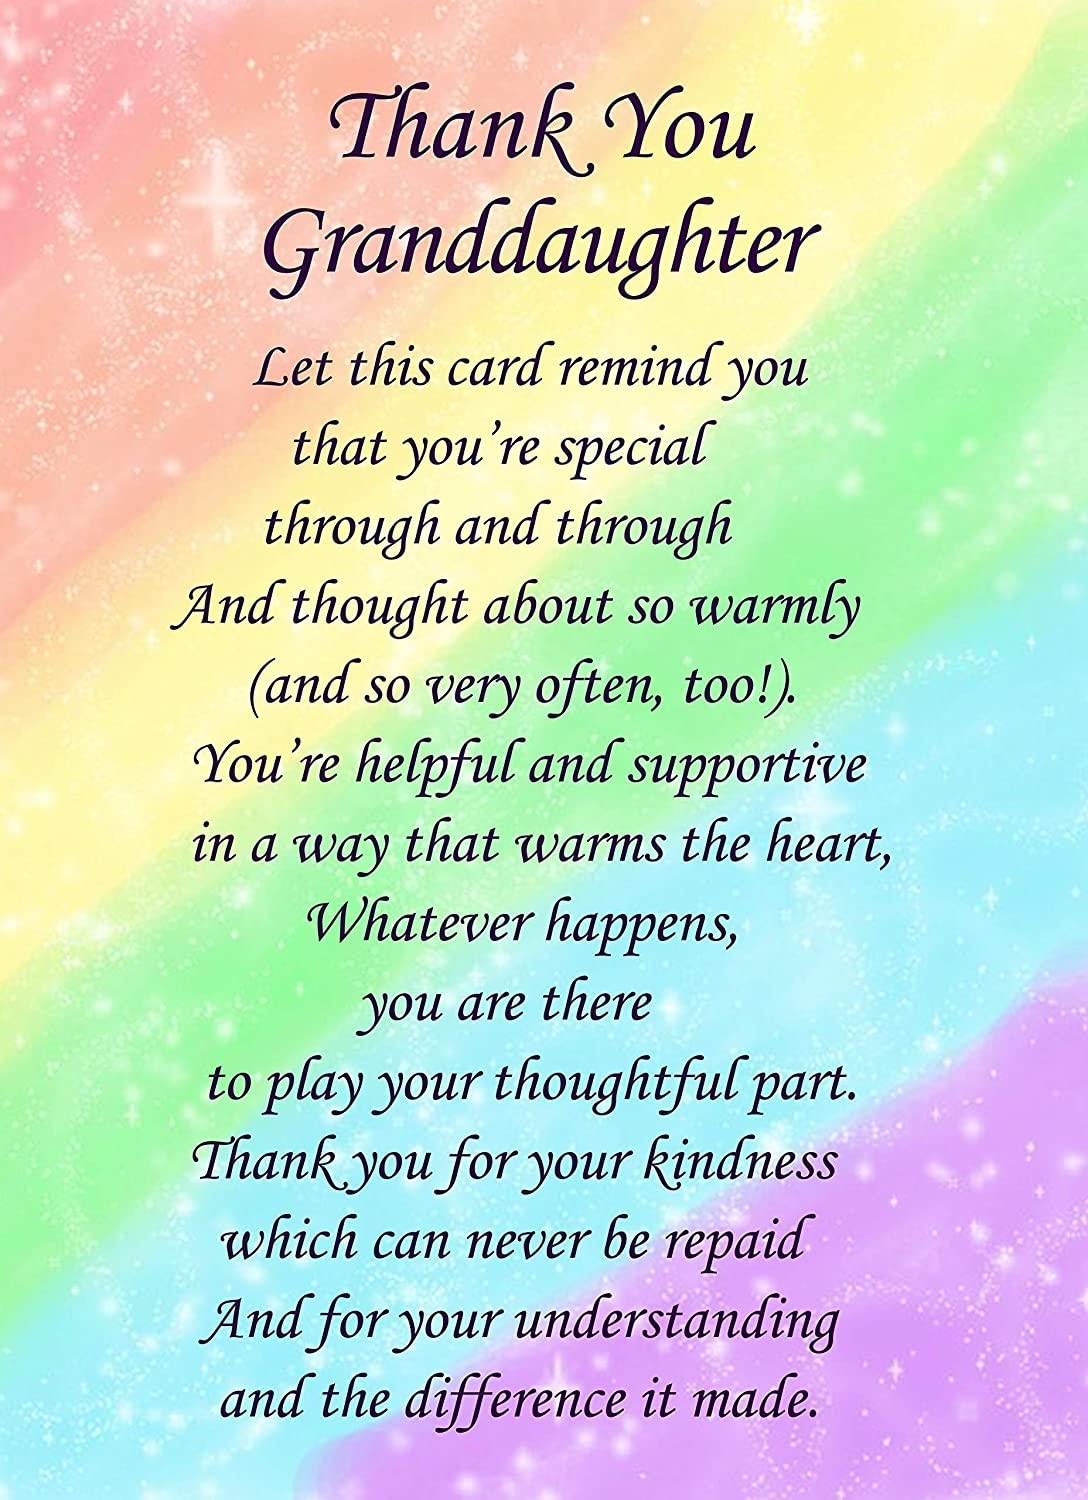 Thank You Granddaughter Poem Verse Greeting Card